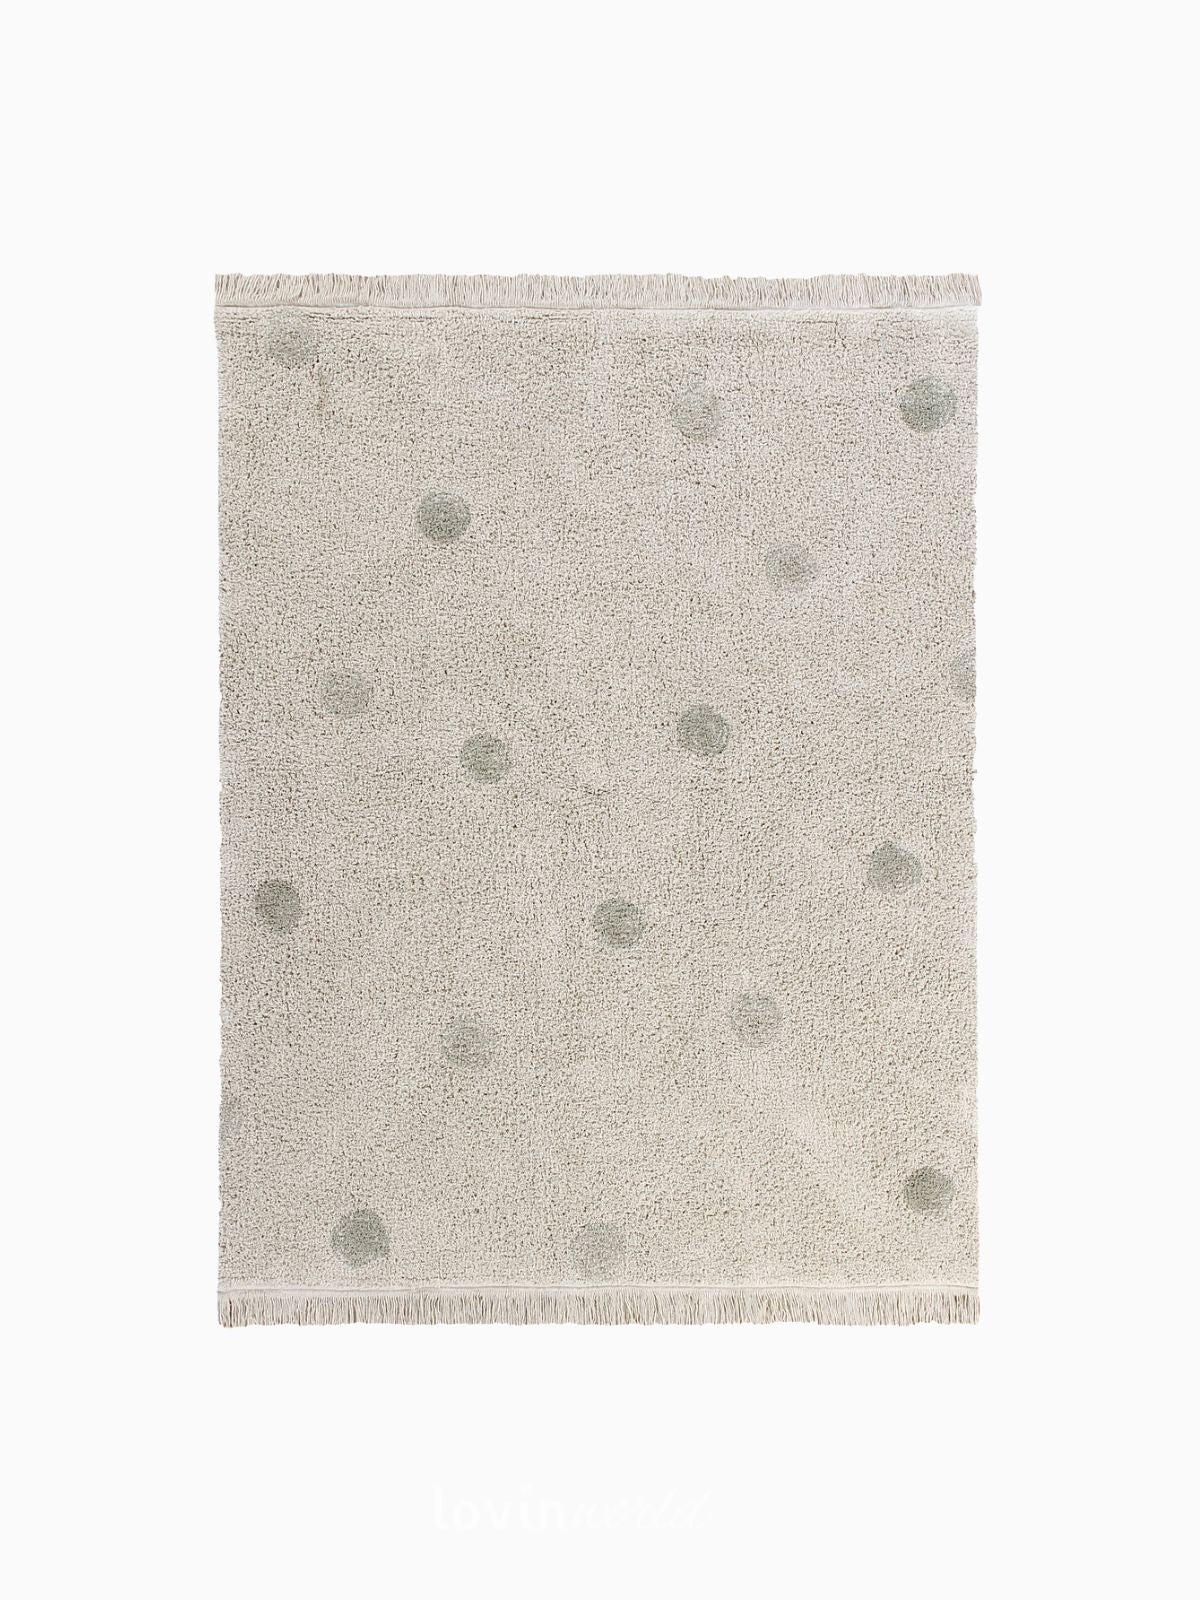 Tappeto in cotone lavabile Hippy Dots Naturale/Olive, 120x160 cm.-1